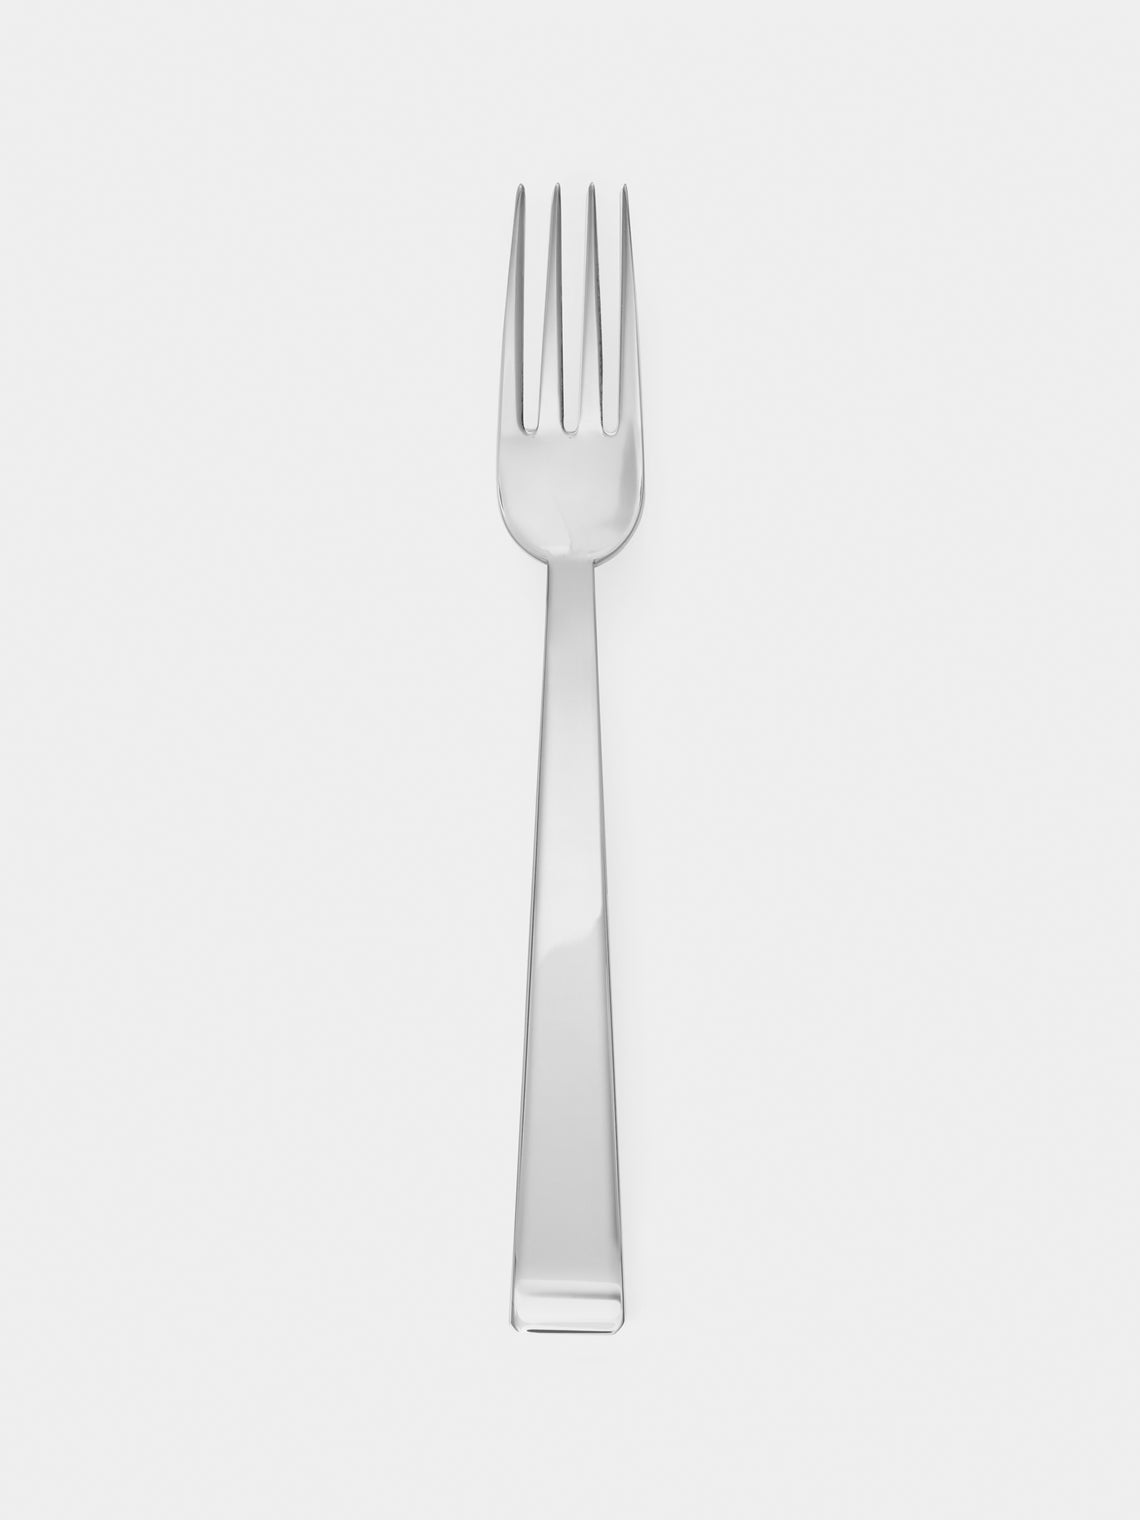 Wiener Silber Manufactur - Josef Hoffmann 135 Silver-Plated Dessert Fork - Silver - ABASK - 